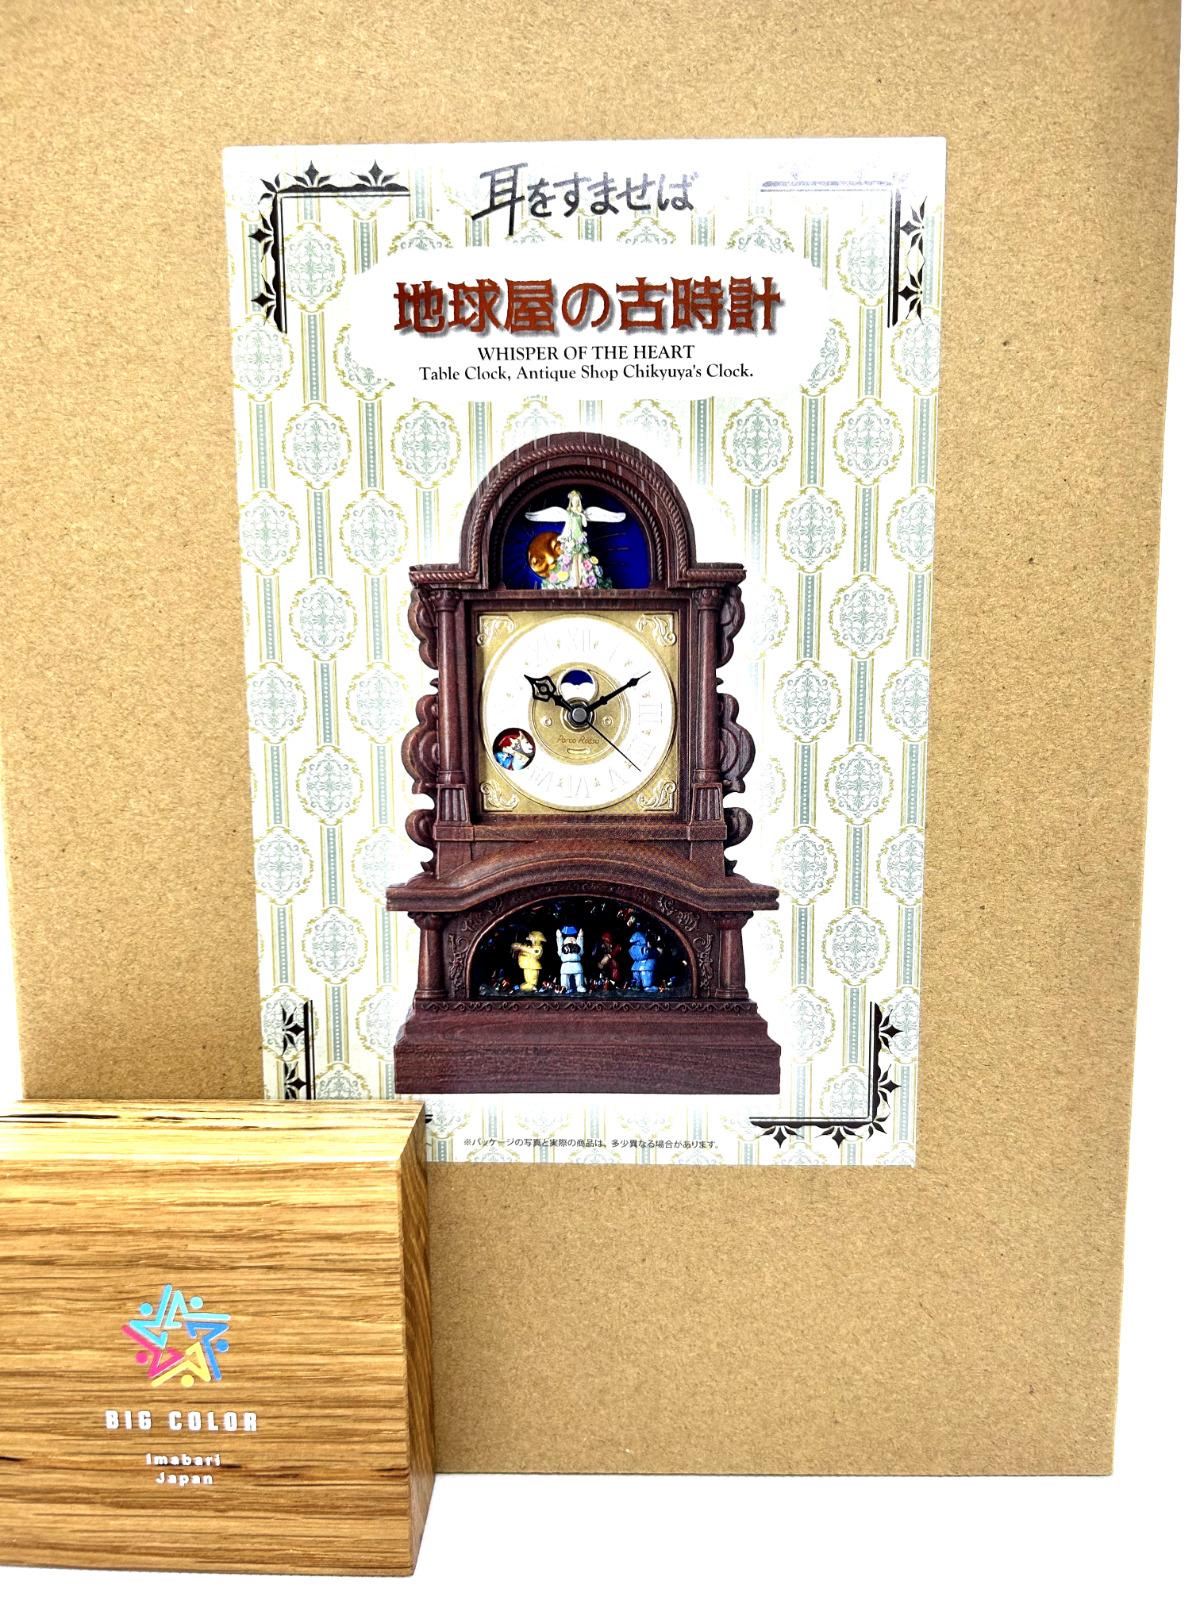 Chikyuya Old Table Clock Whisper of the Heart Studio Ghibli Antique